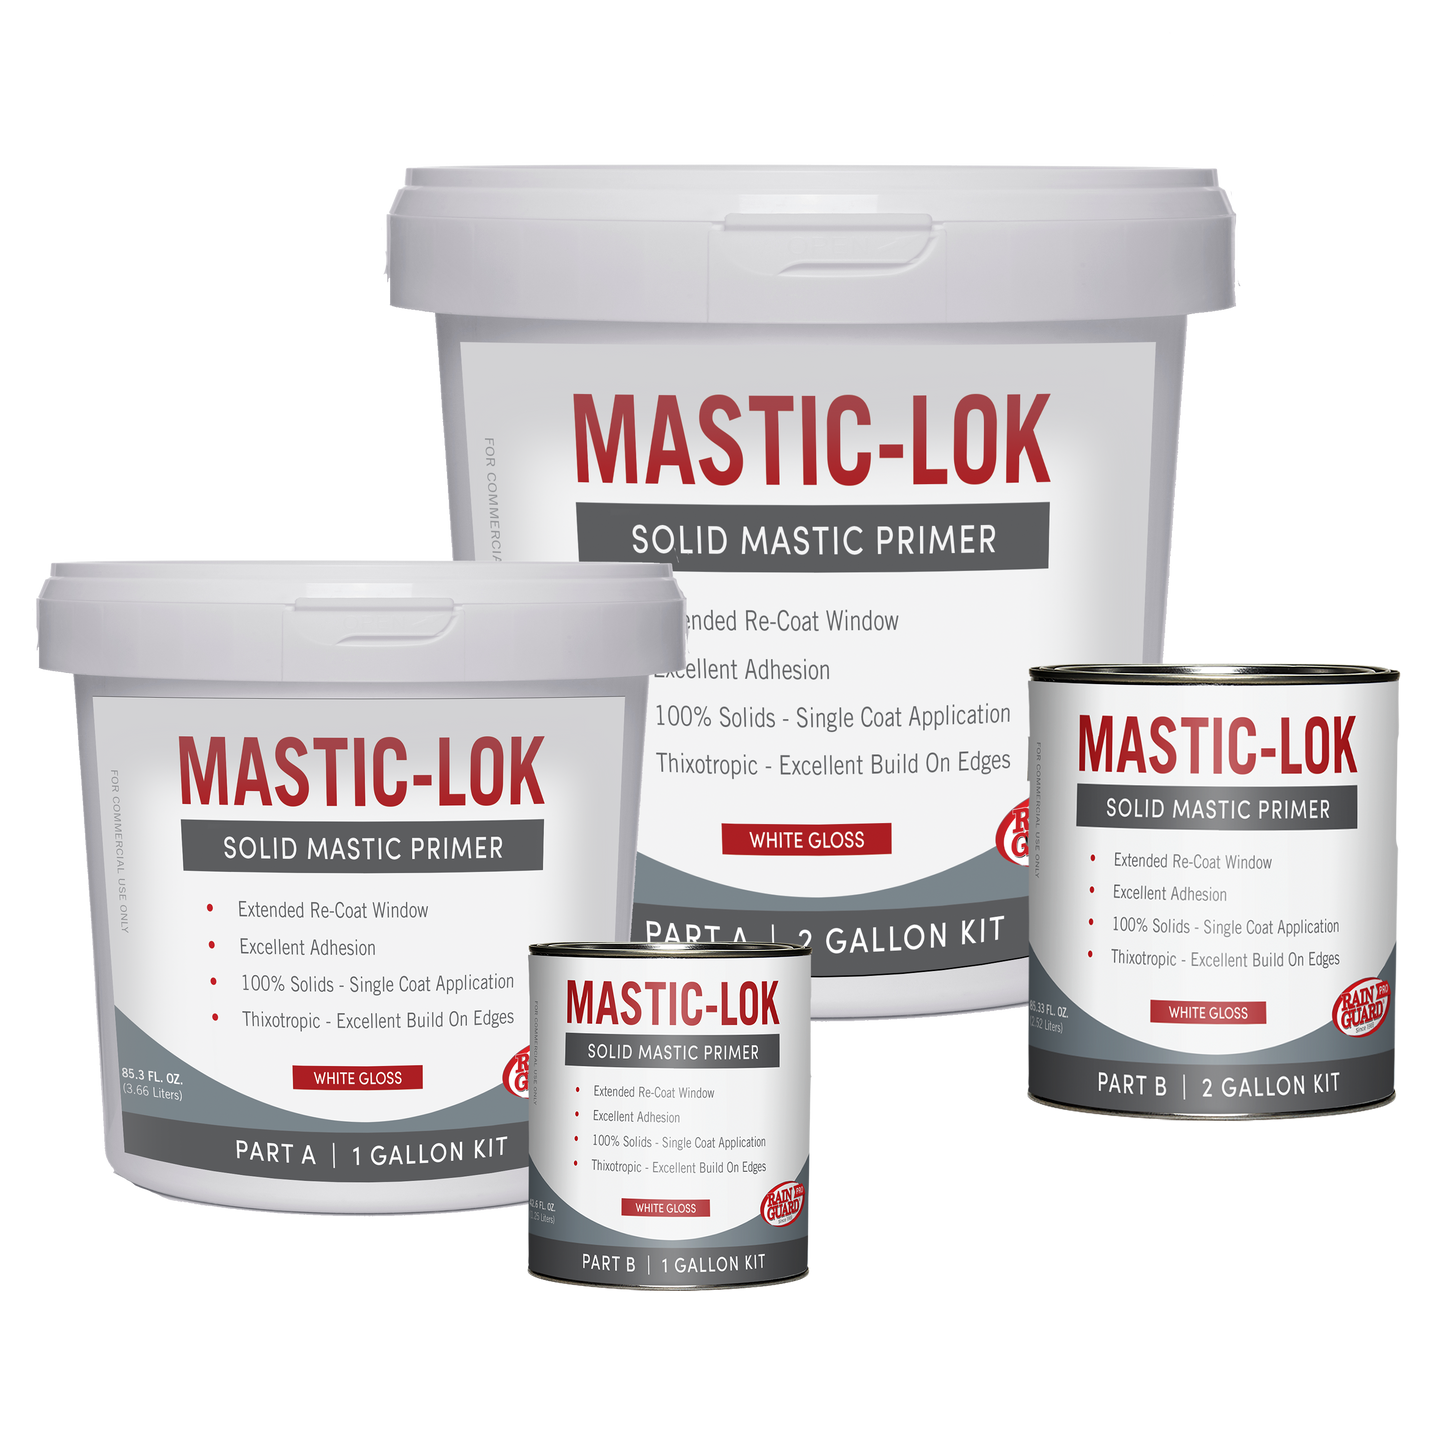 Mastic-Lok